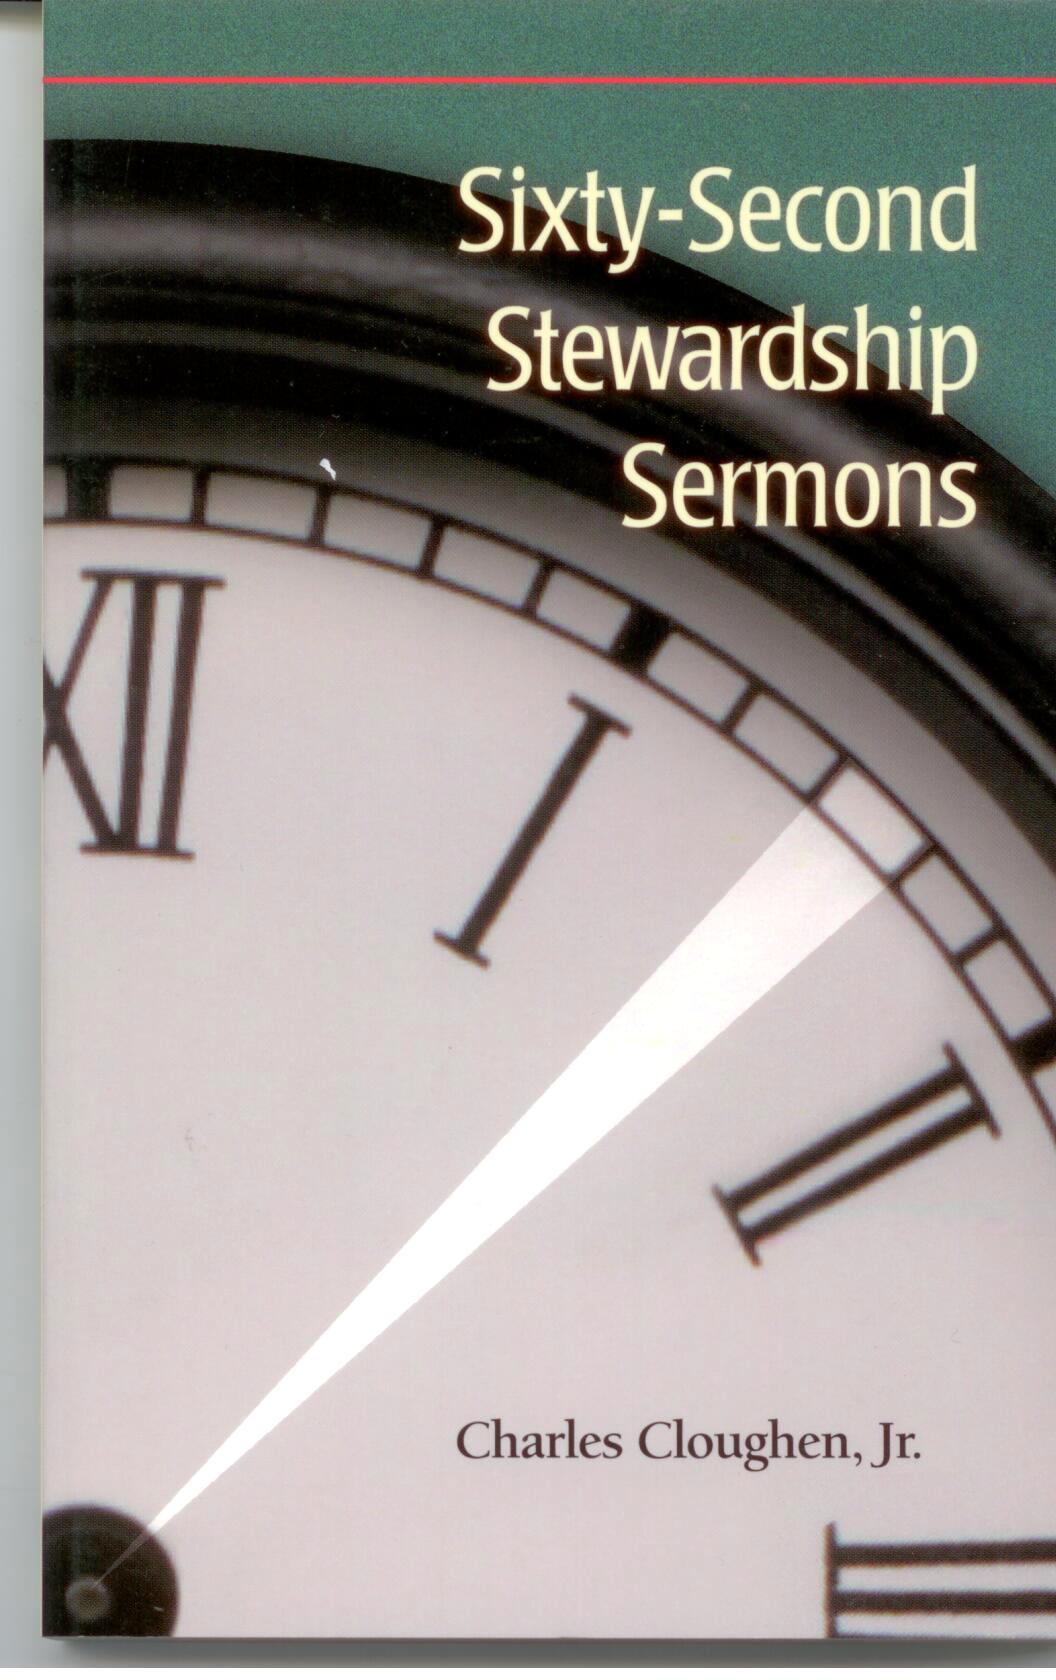 Sixty Second Stewardship Sermons by Charles Cloughen, Jr.